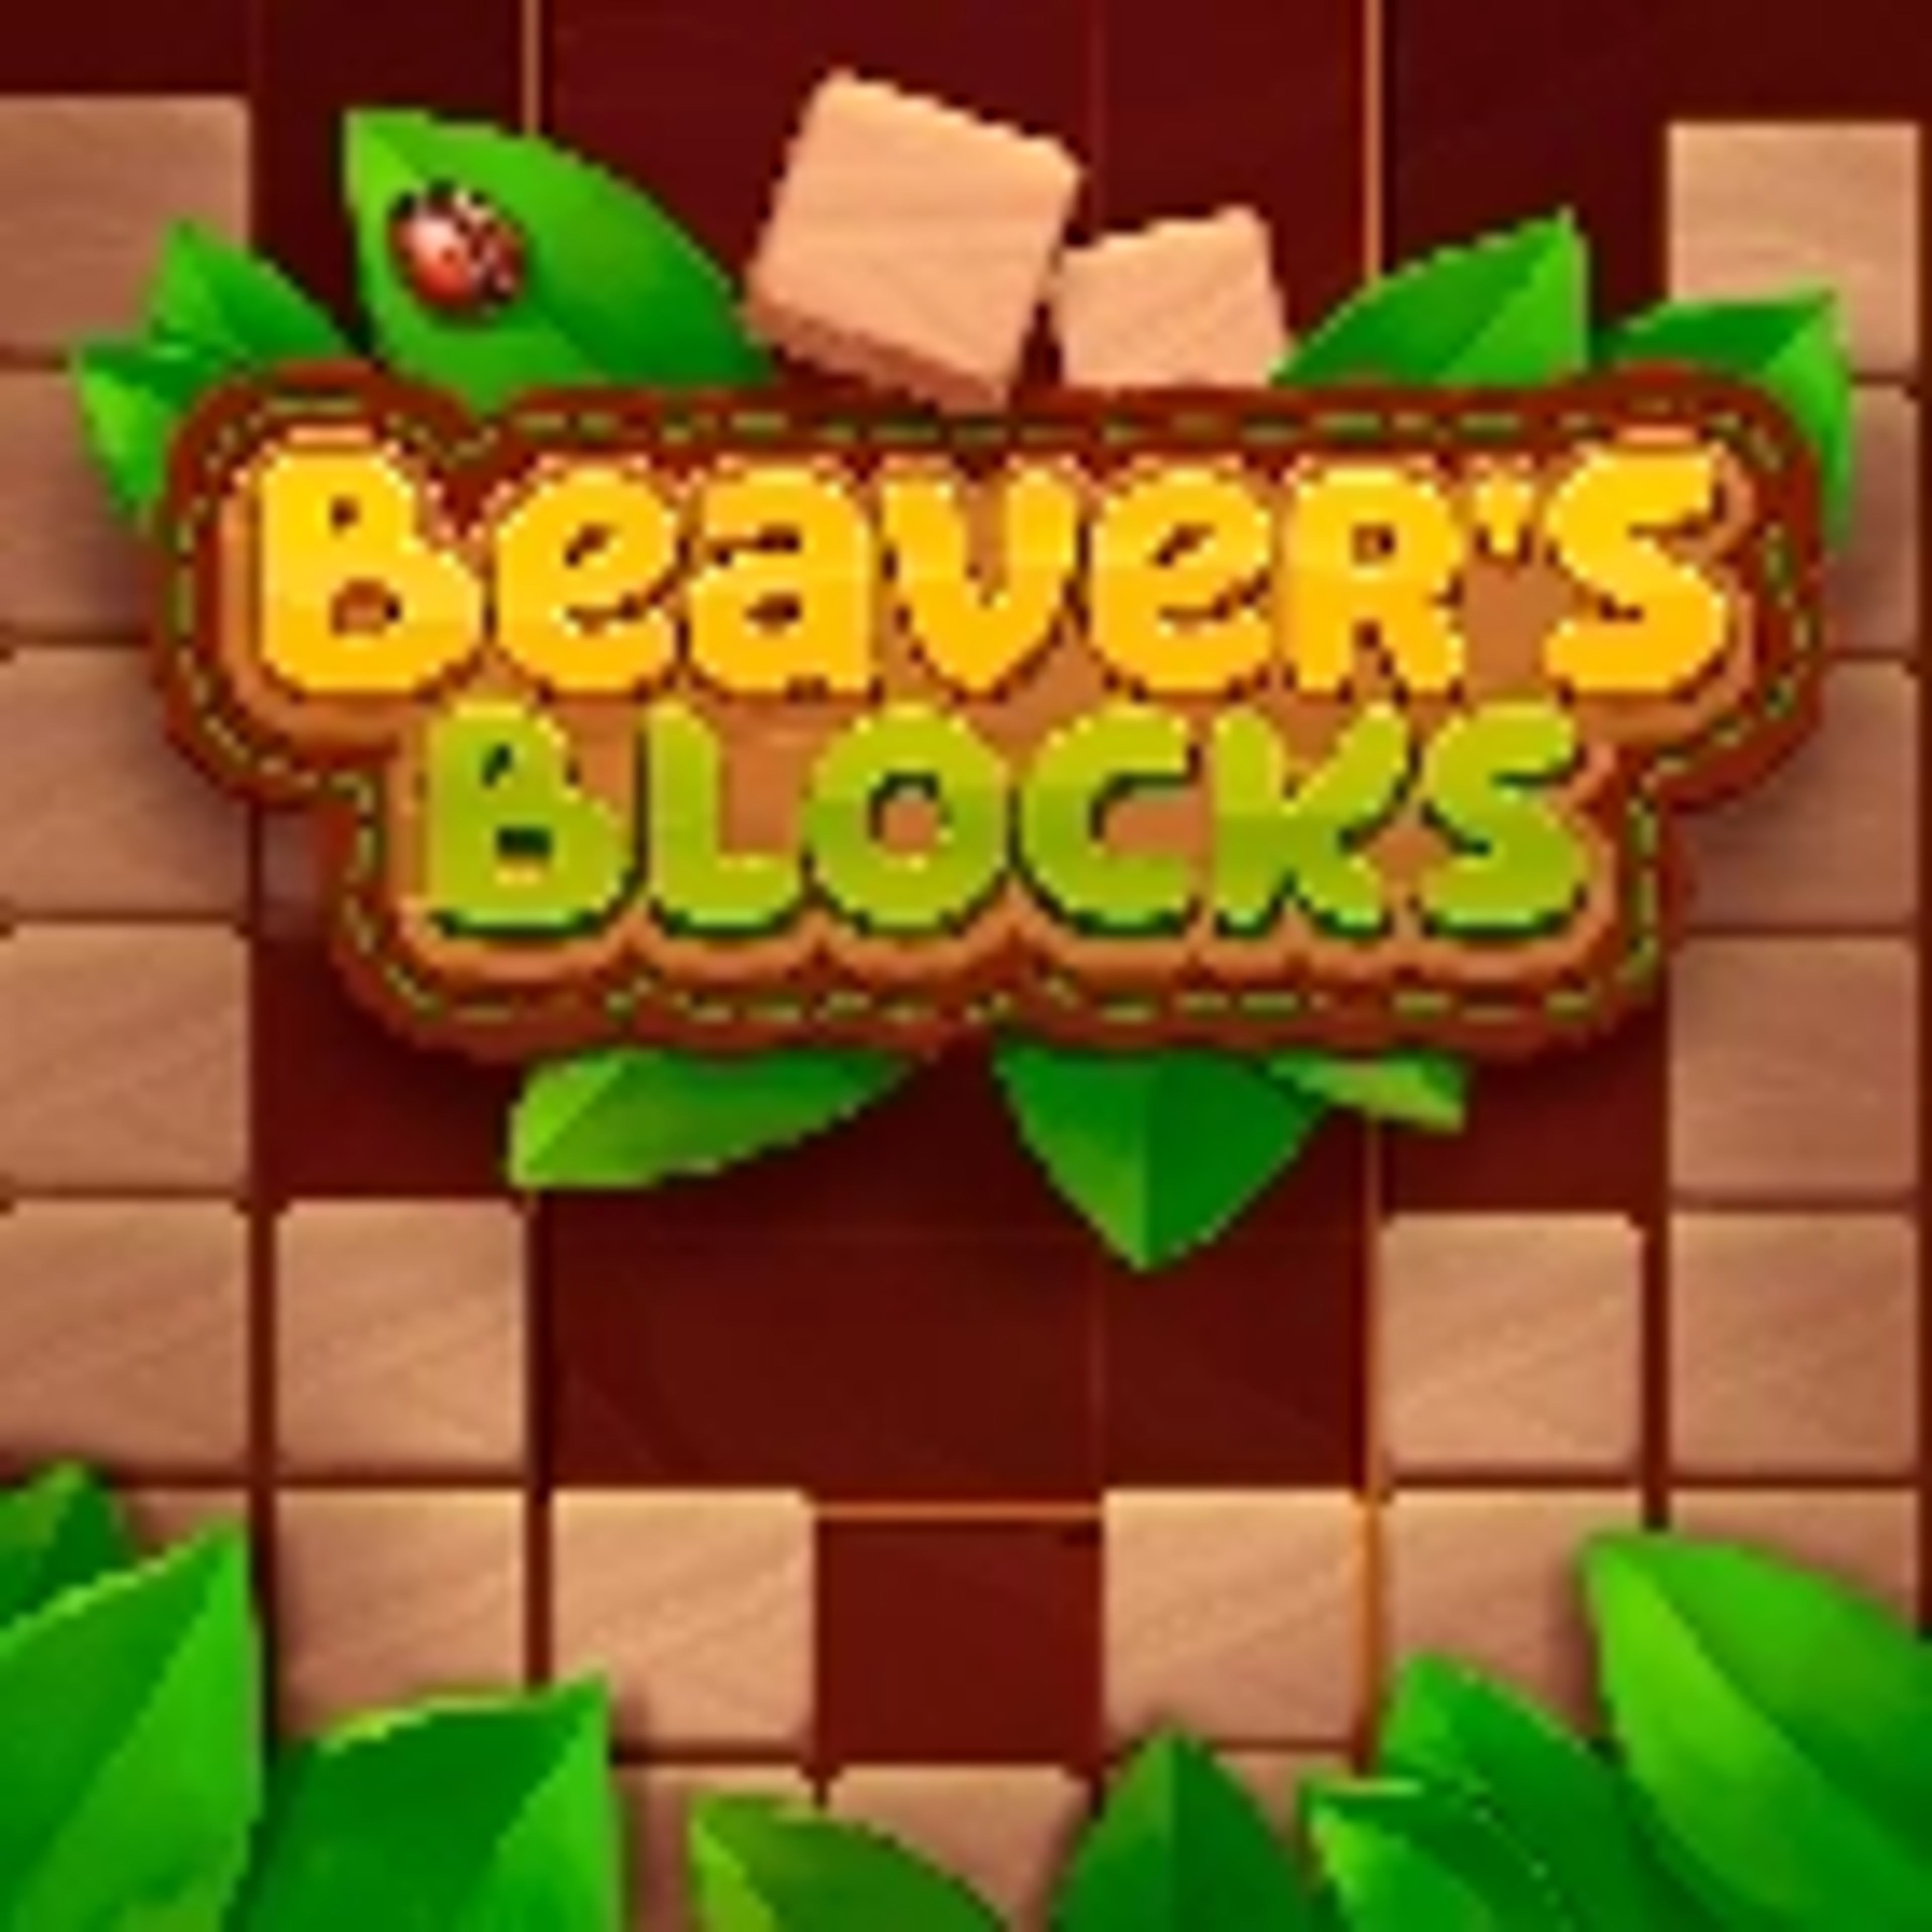 Beaver@@s Blocks